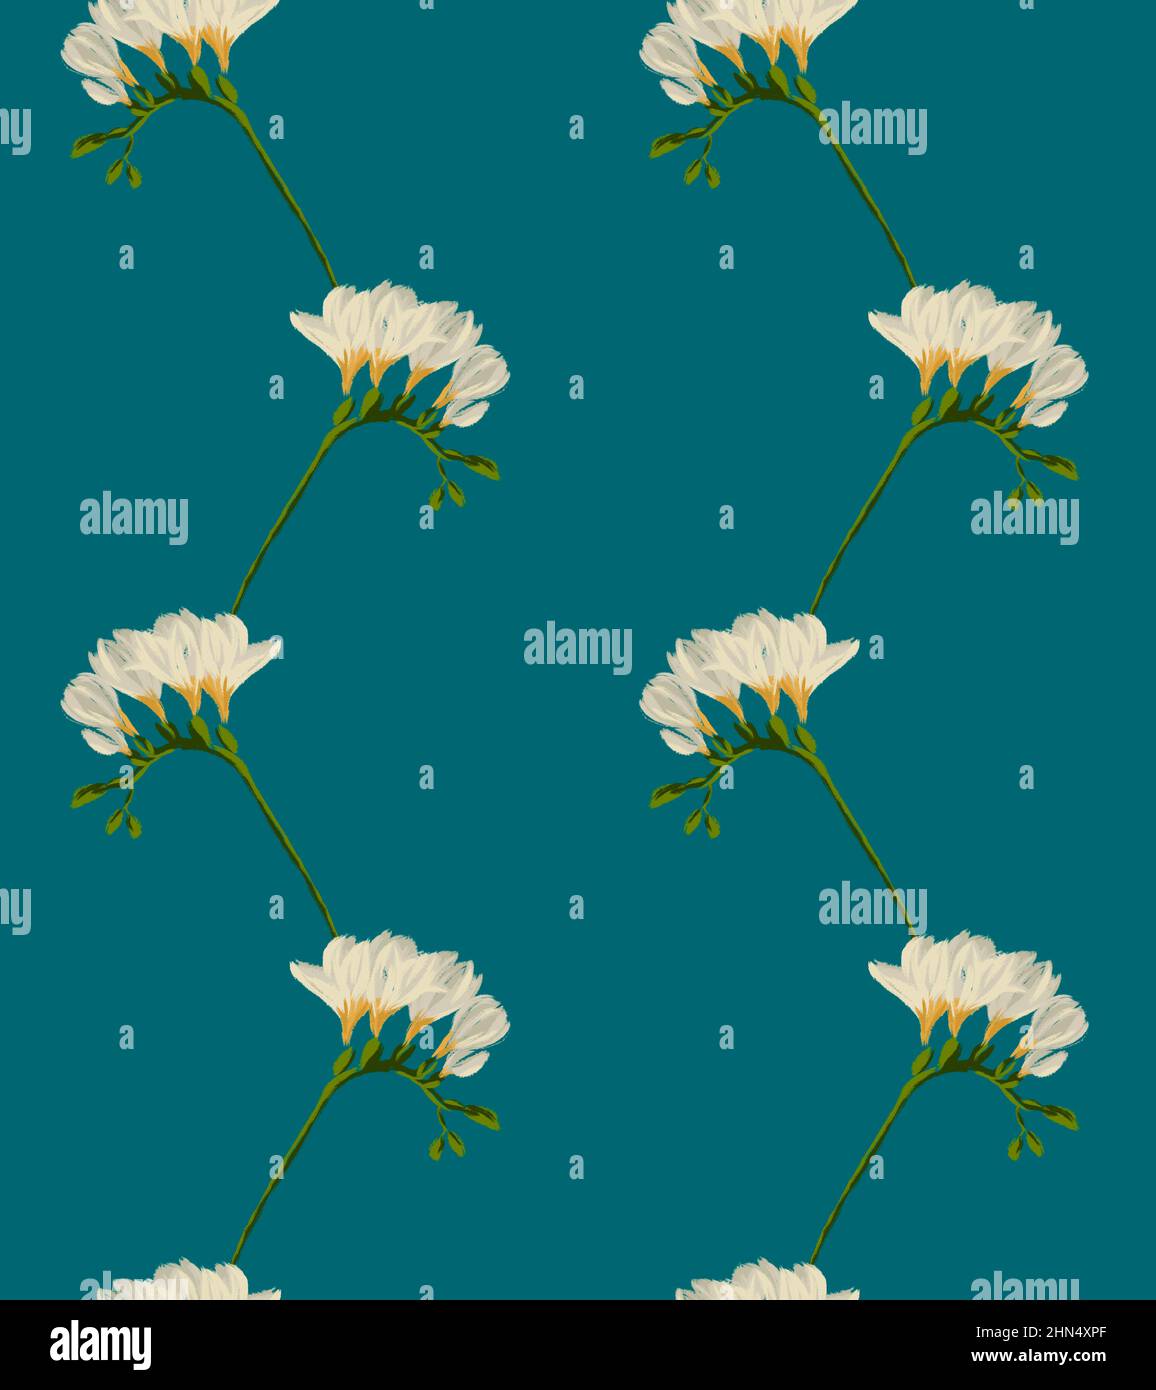 Freesia white blooming flower twig seamless pattern illustraion on blue background Stock Photo